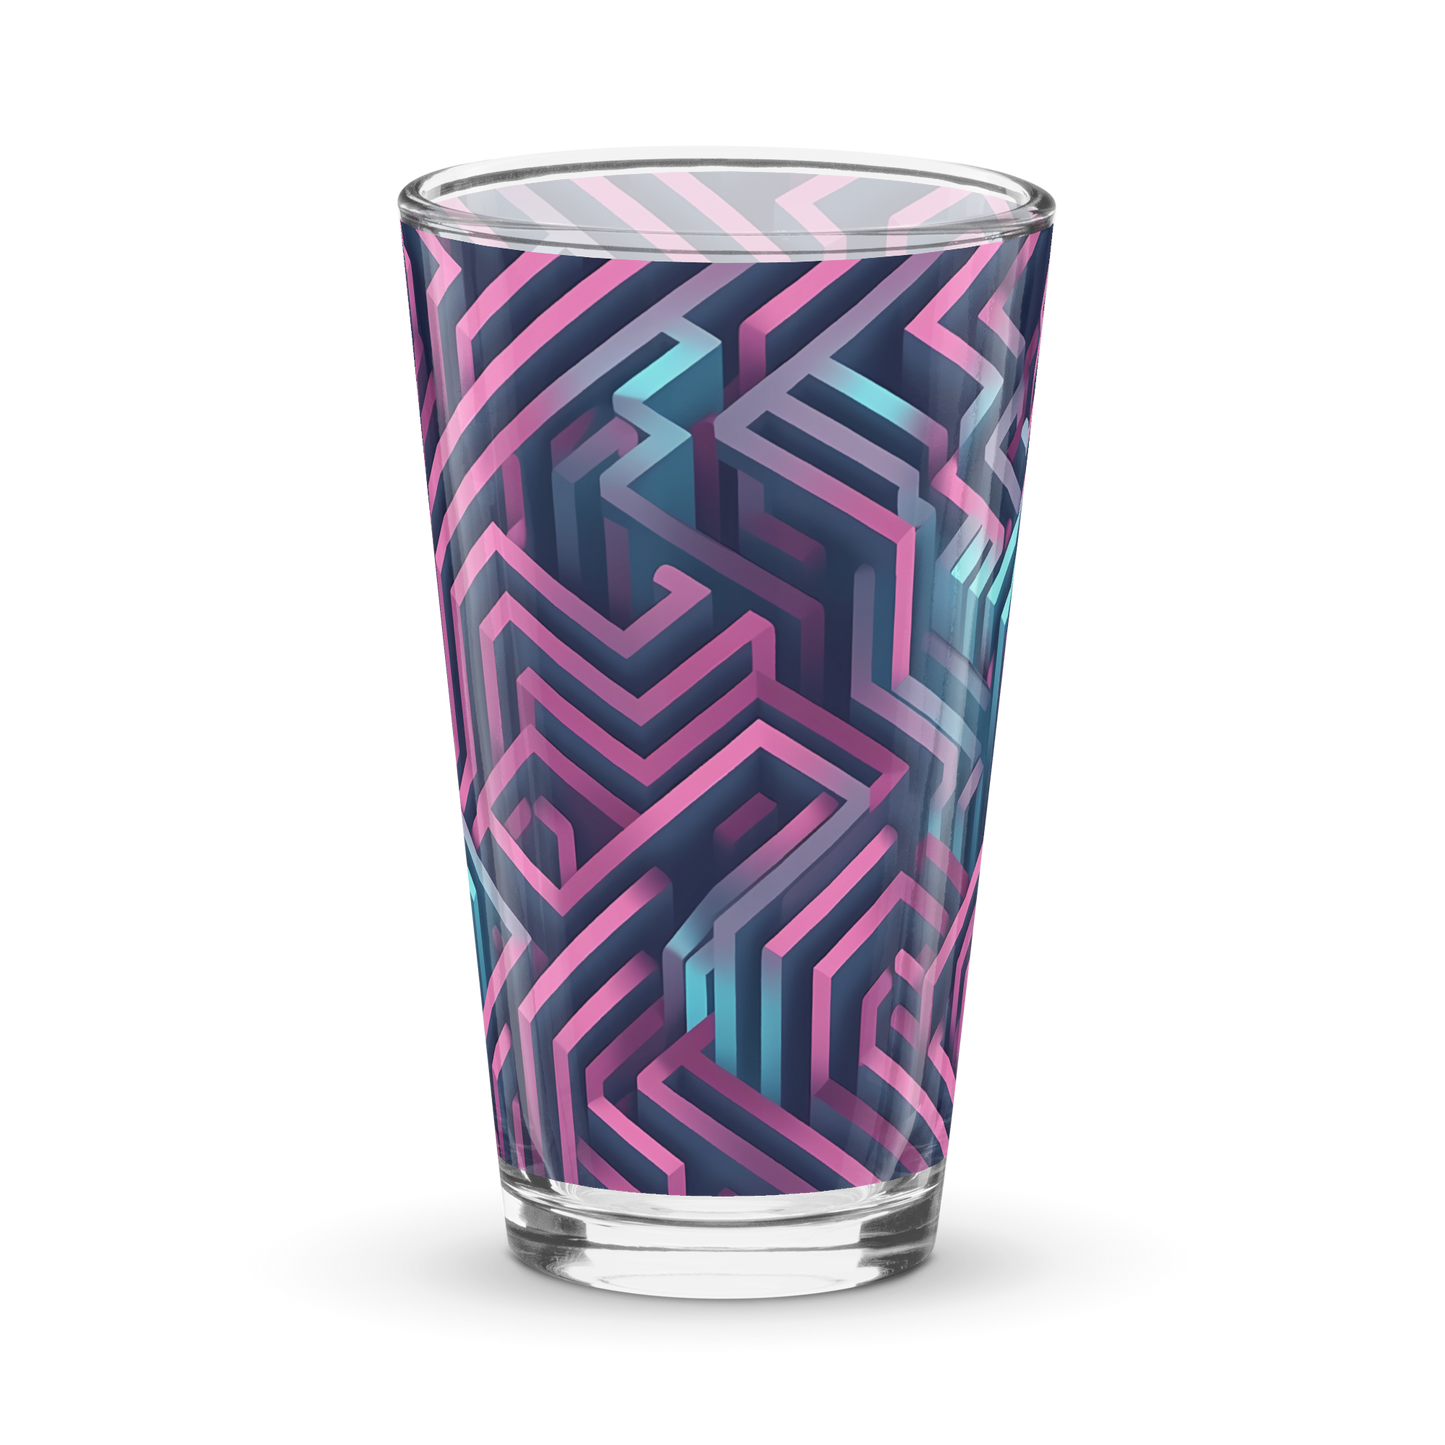 3D Maze Illusion | 3D Patterns | Shaker Pint Glass (16 oz) - #4